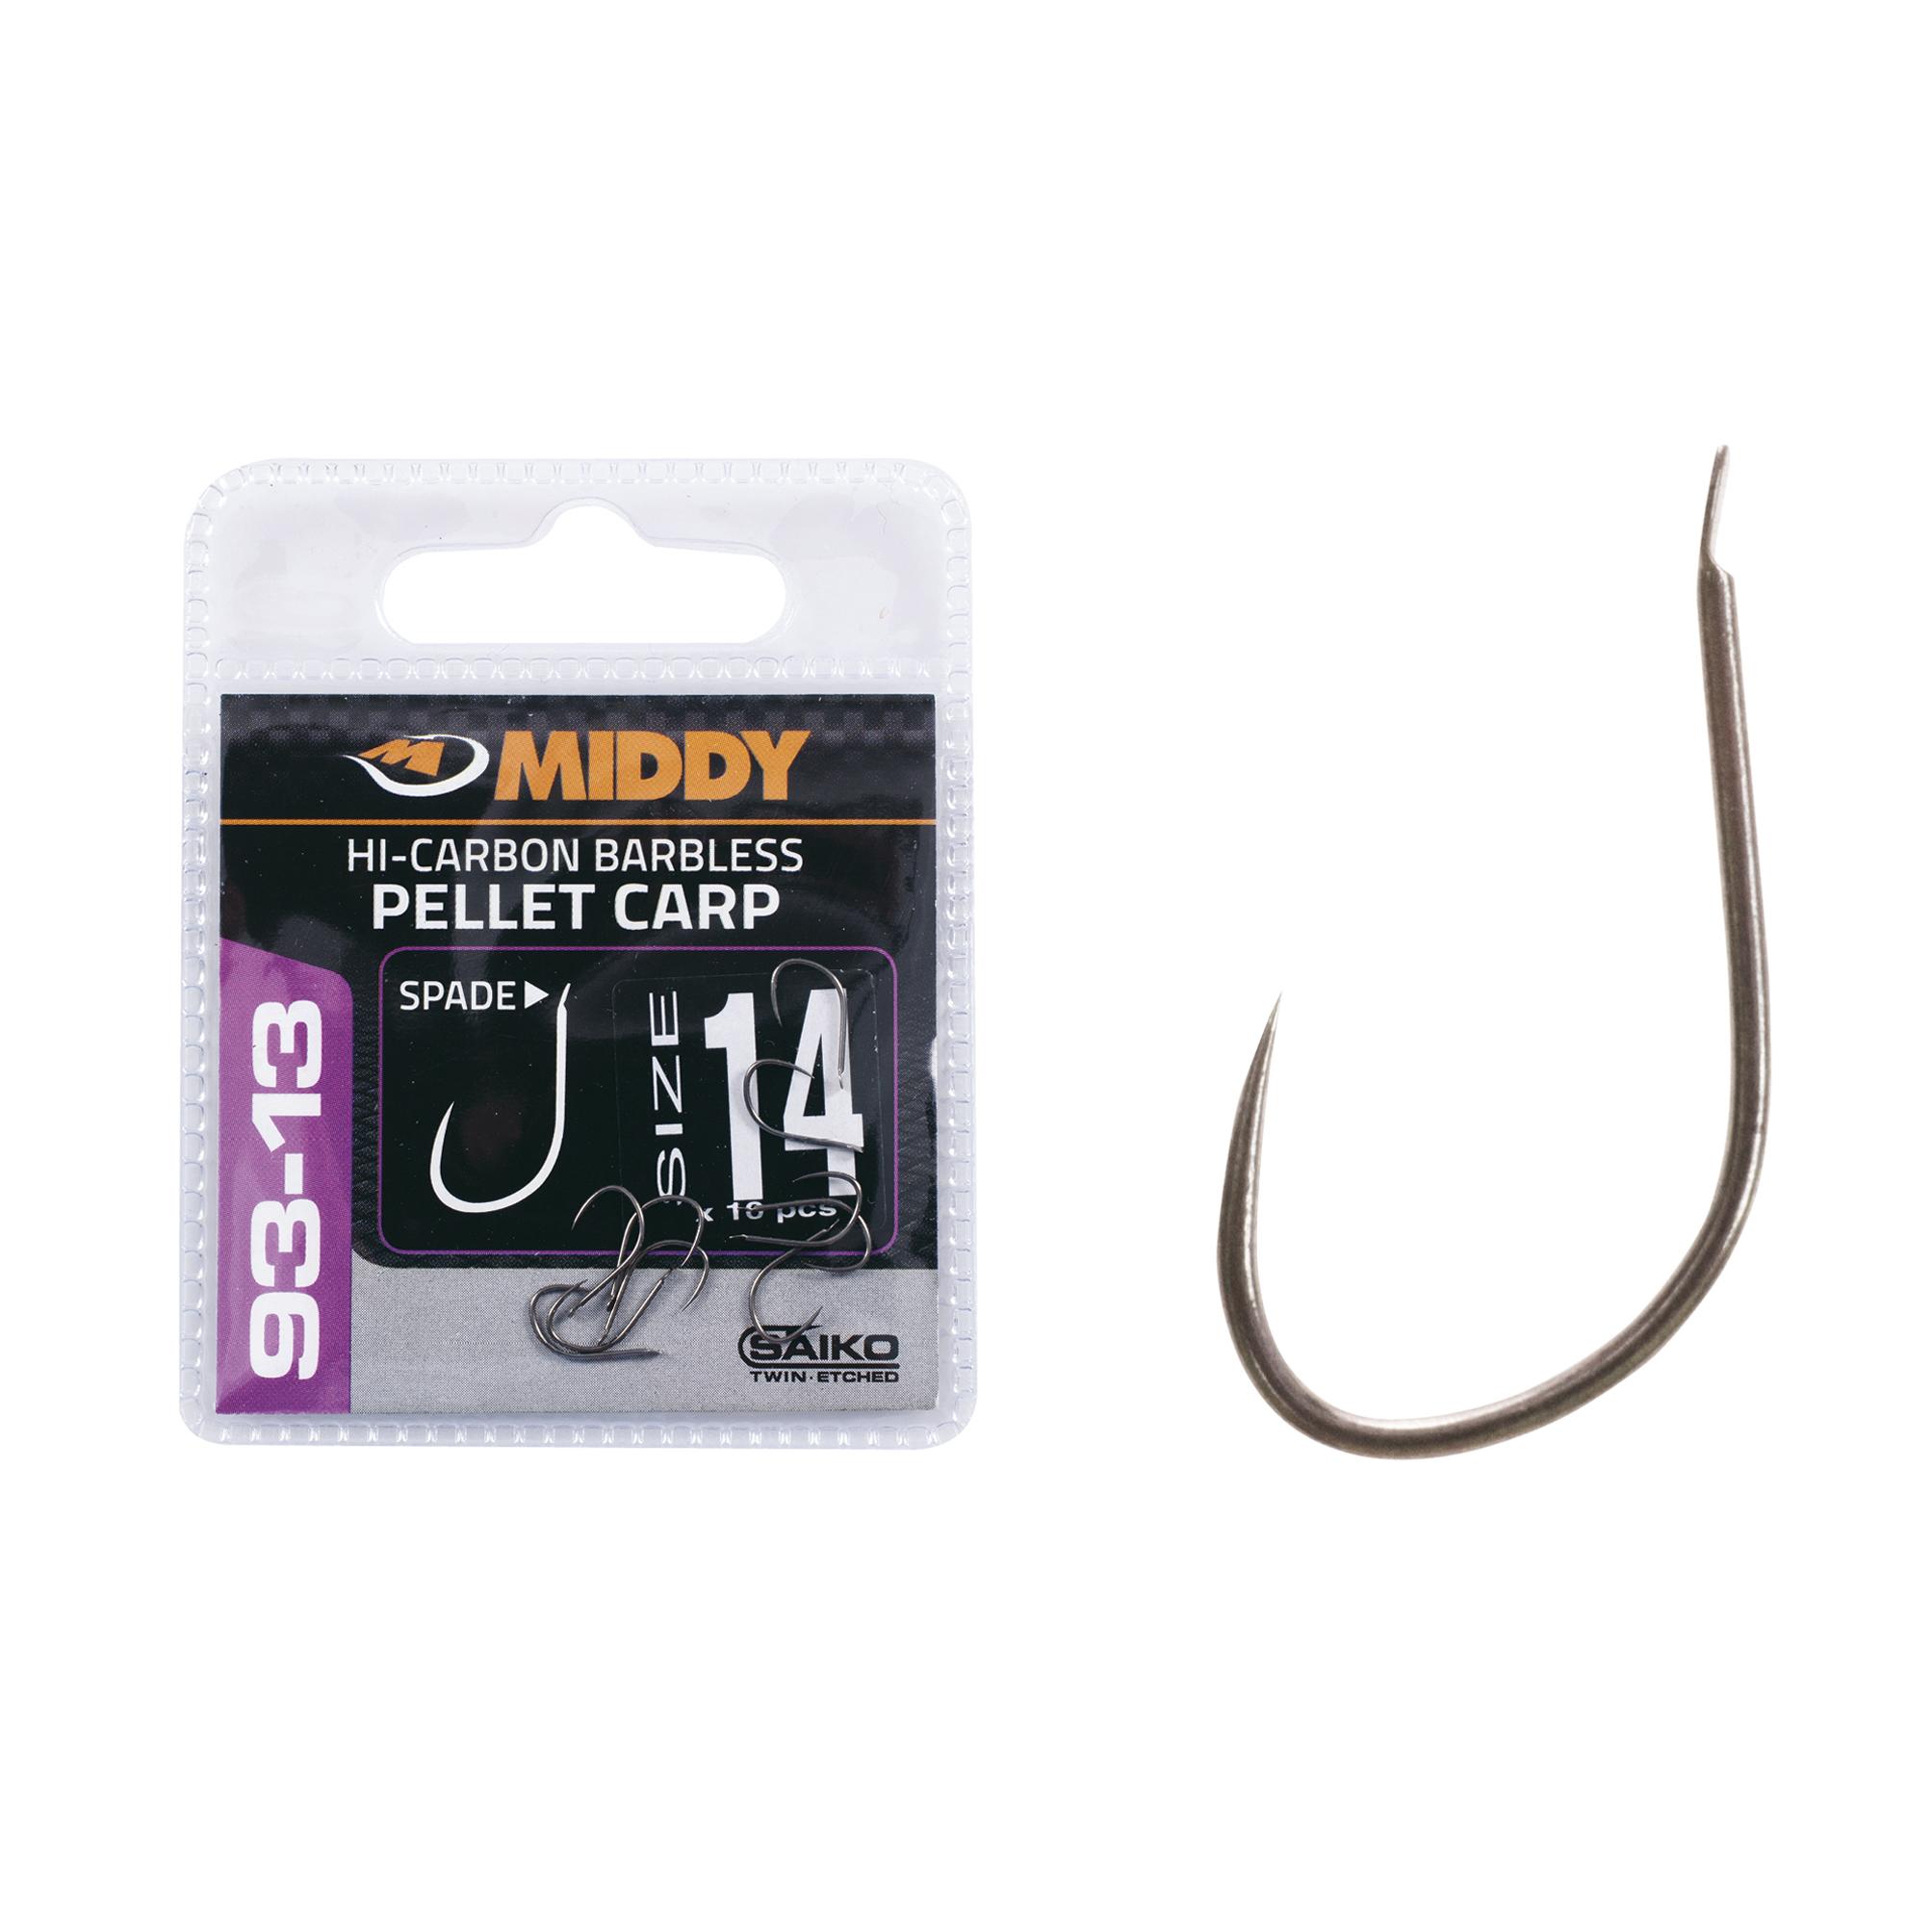 Middy 93-13 Pellet Carp Spade Hooks 18s (10pc)